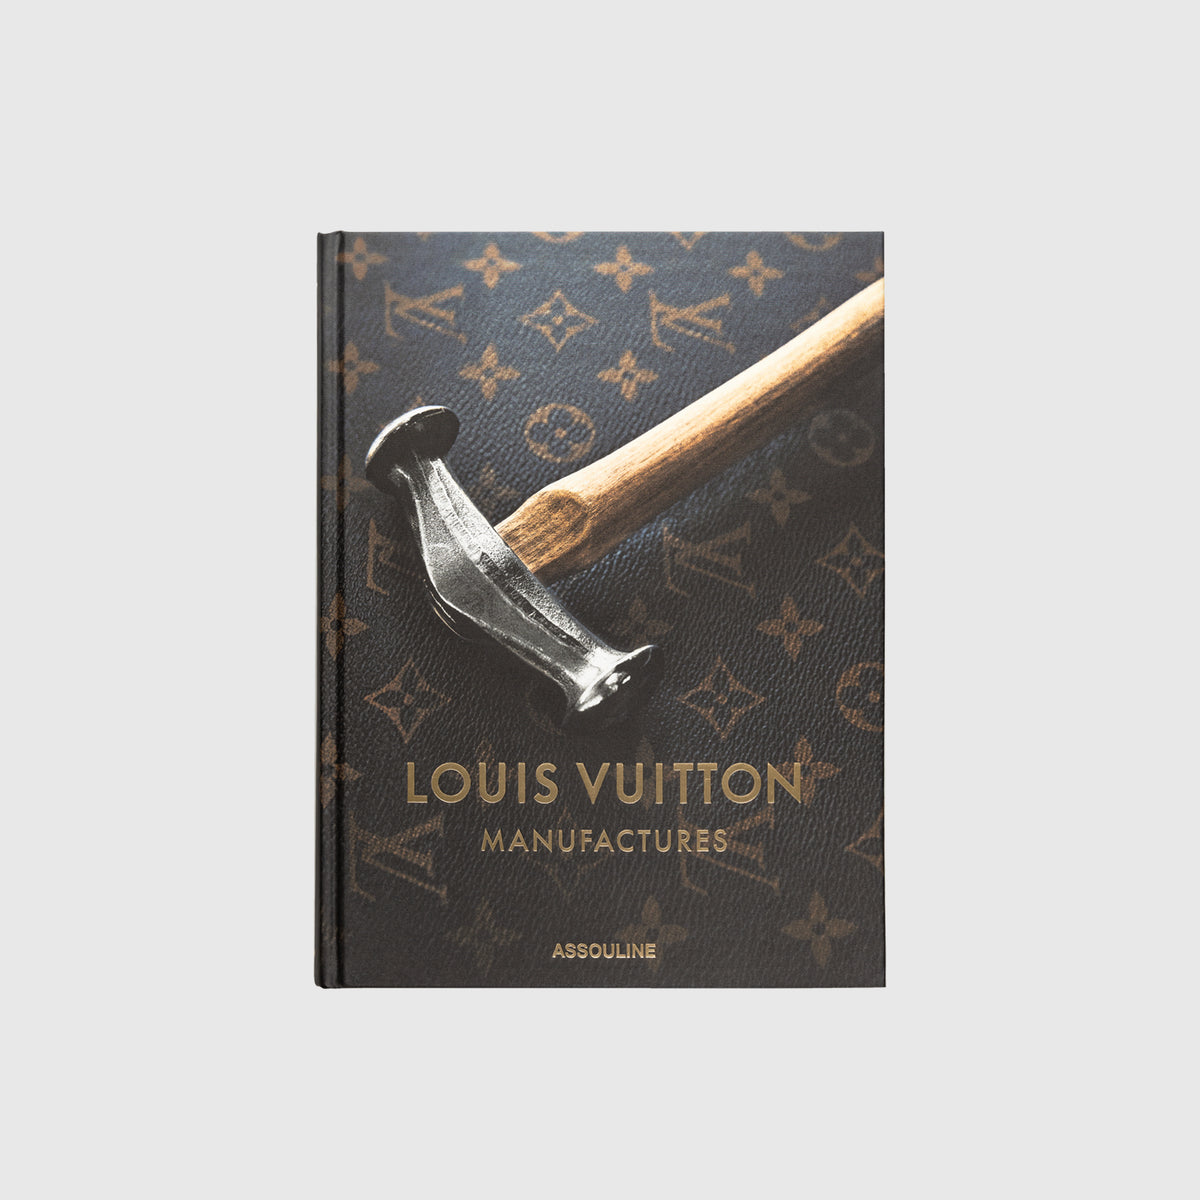 LOUIS VUITTON MANUFACTURES – PACKER SHOES